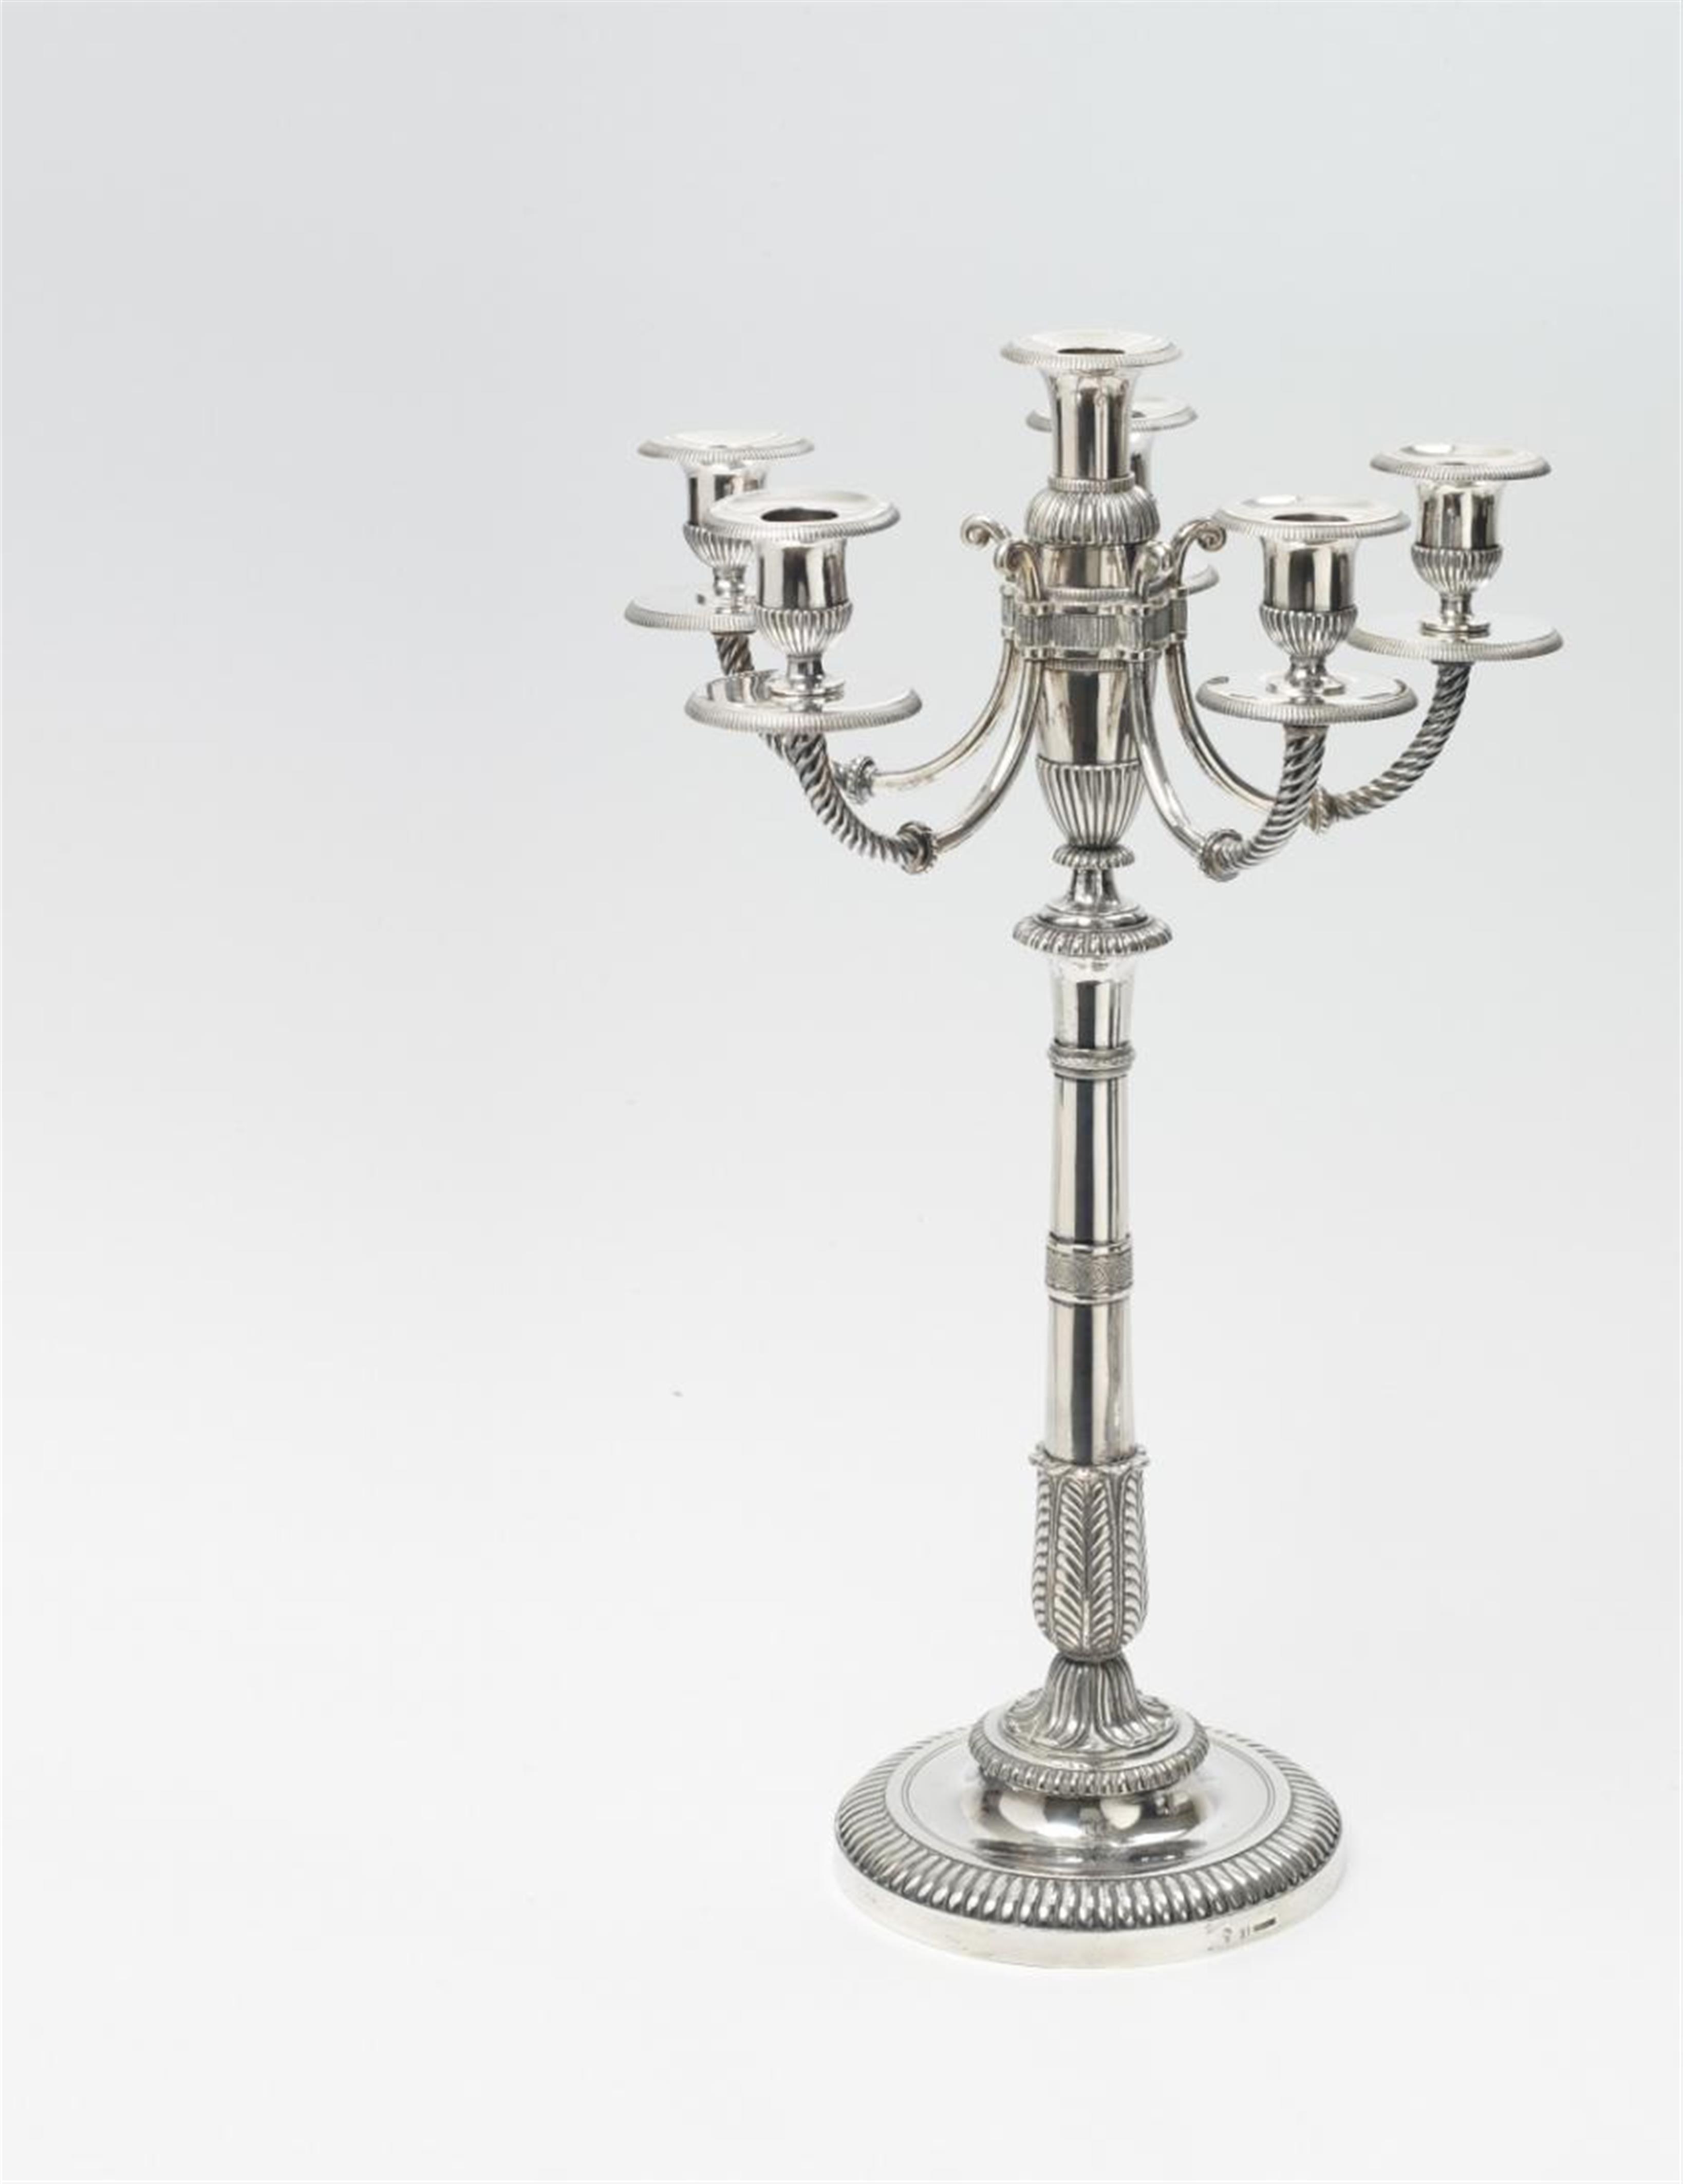 A Kassel silver candelabrum made for Elector Wilhelm II of Hessen-Kassel, monogrammed "W II K" beneath the electoral crown. Marks of Carl Heinrich Kördell, ca. 1824/25. - image-1